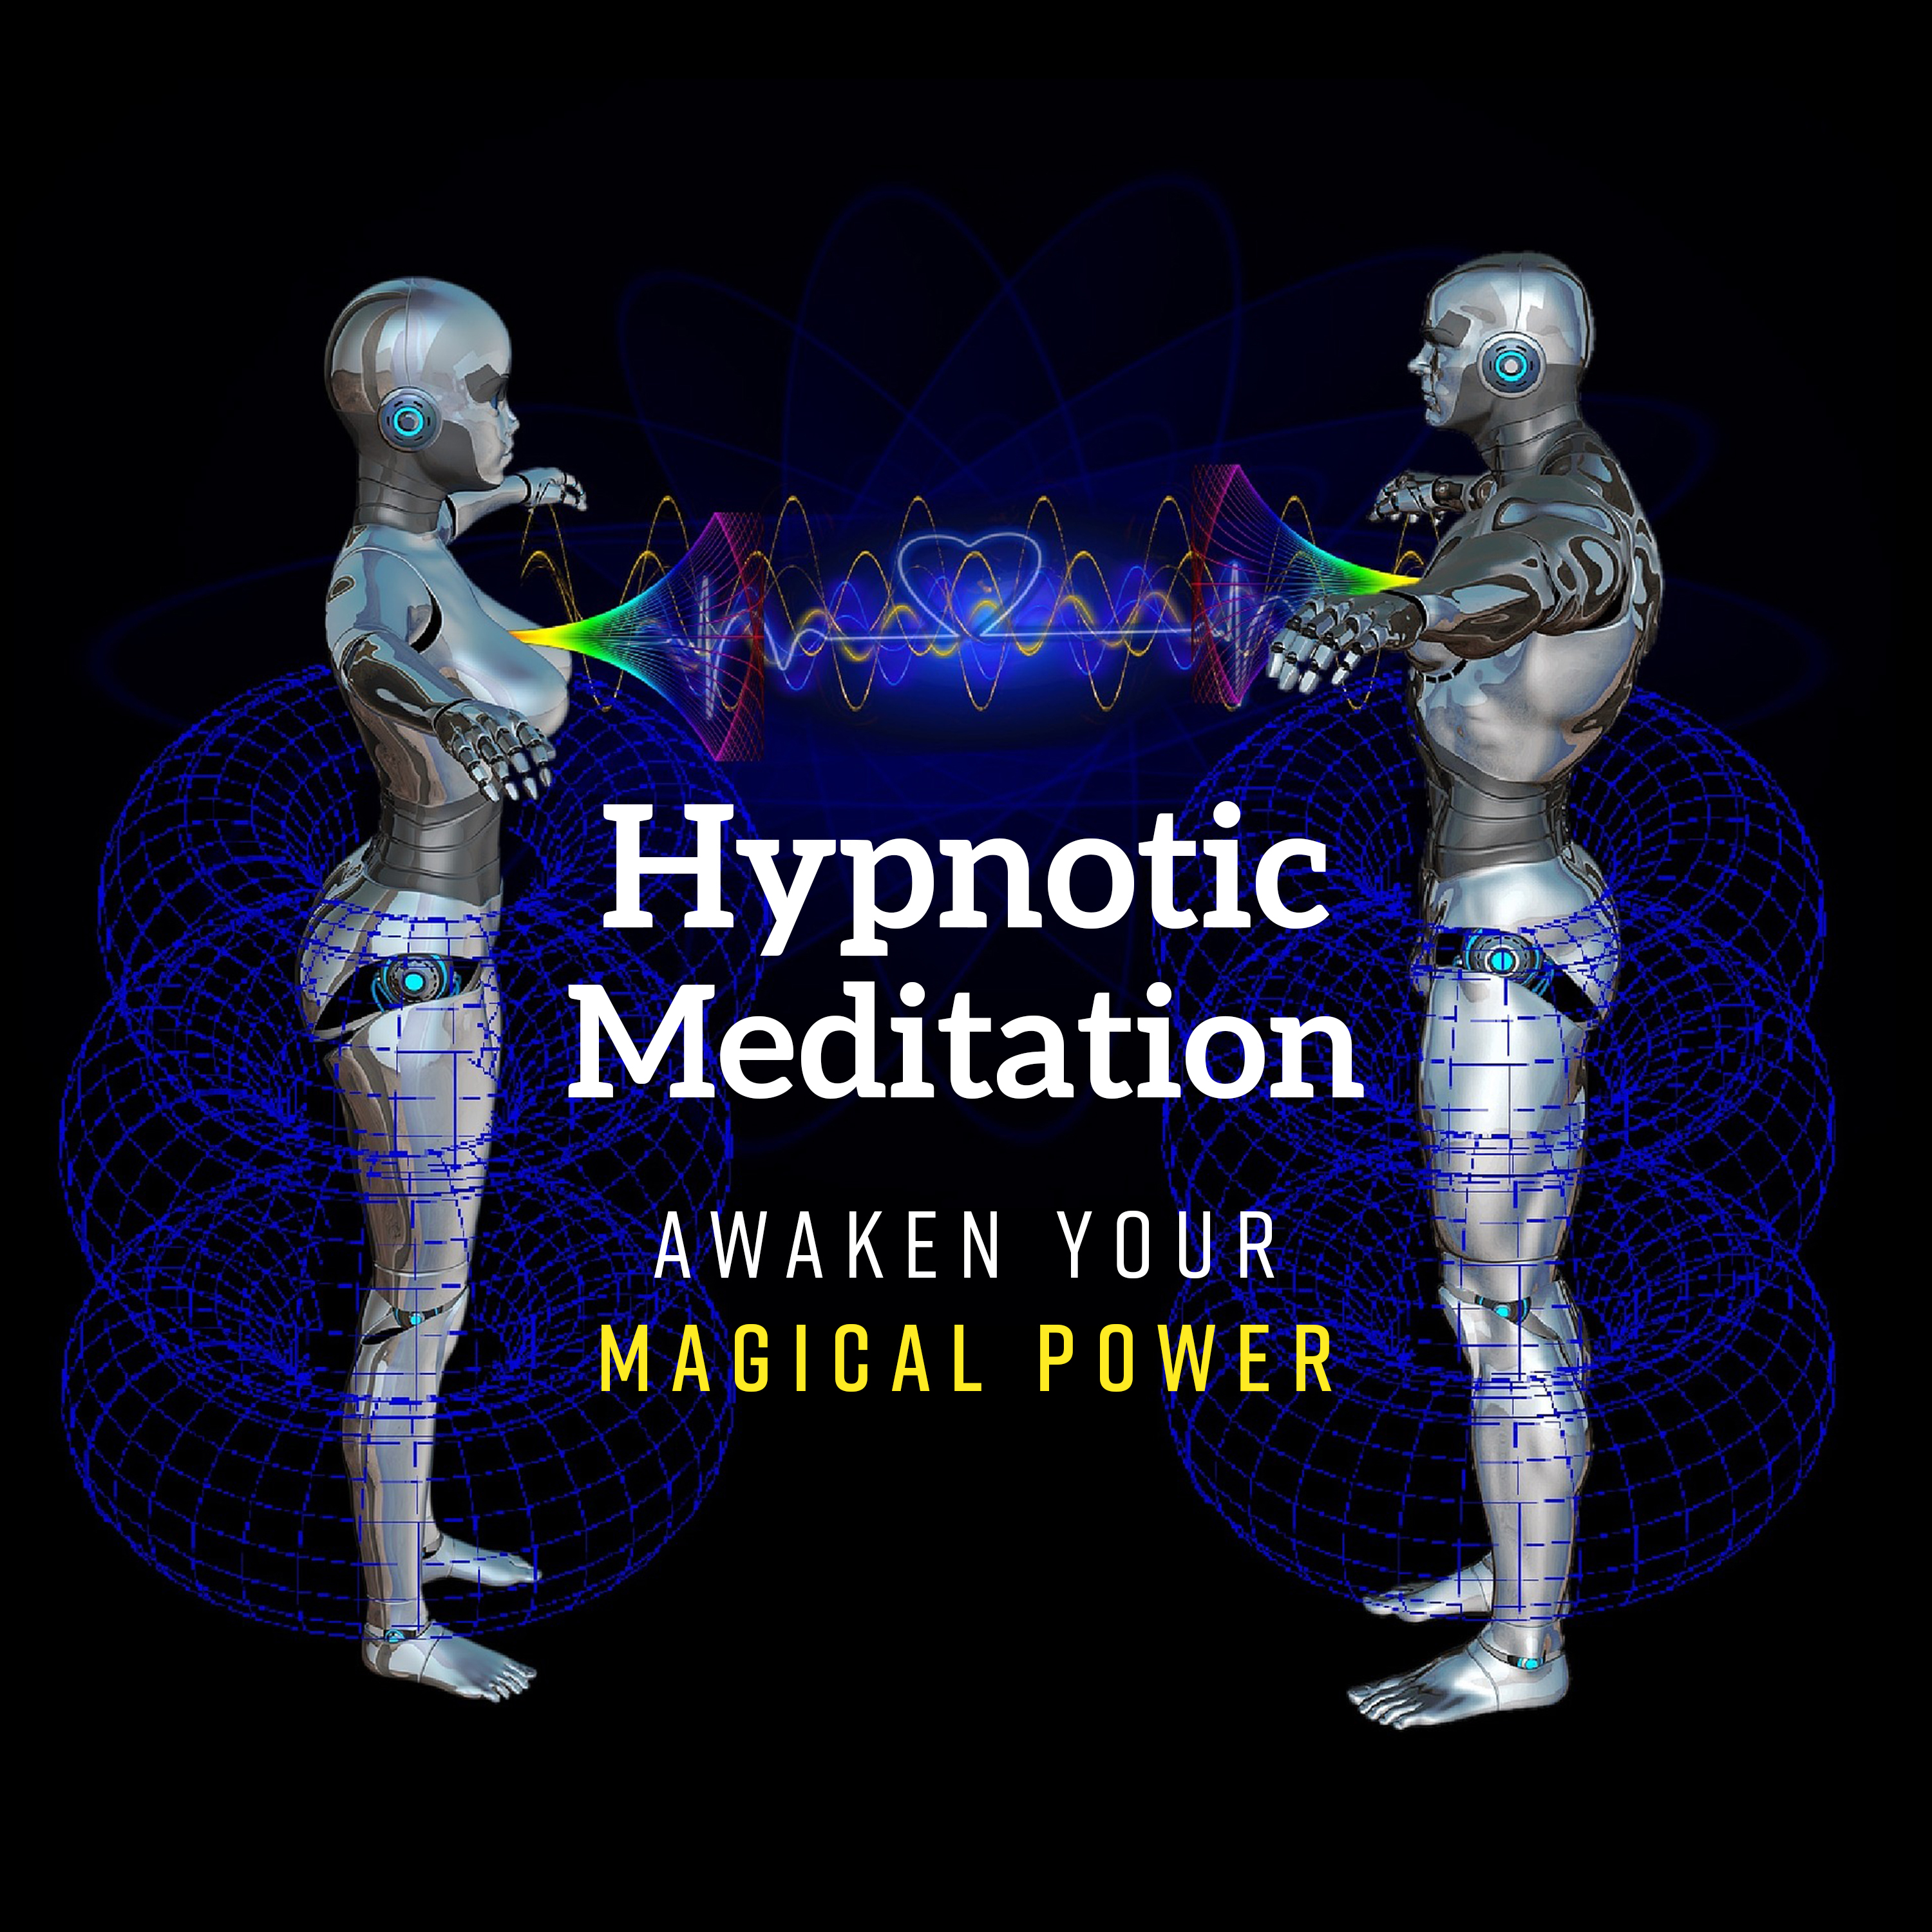 Hypnotic Meditation (Awaken Your Magical Power - Positive Energy, Reiki Healing, Relaxation Sleep, Kundalini Activation)